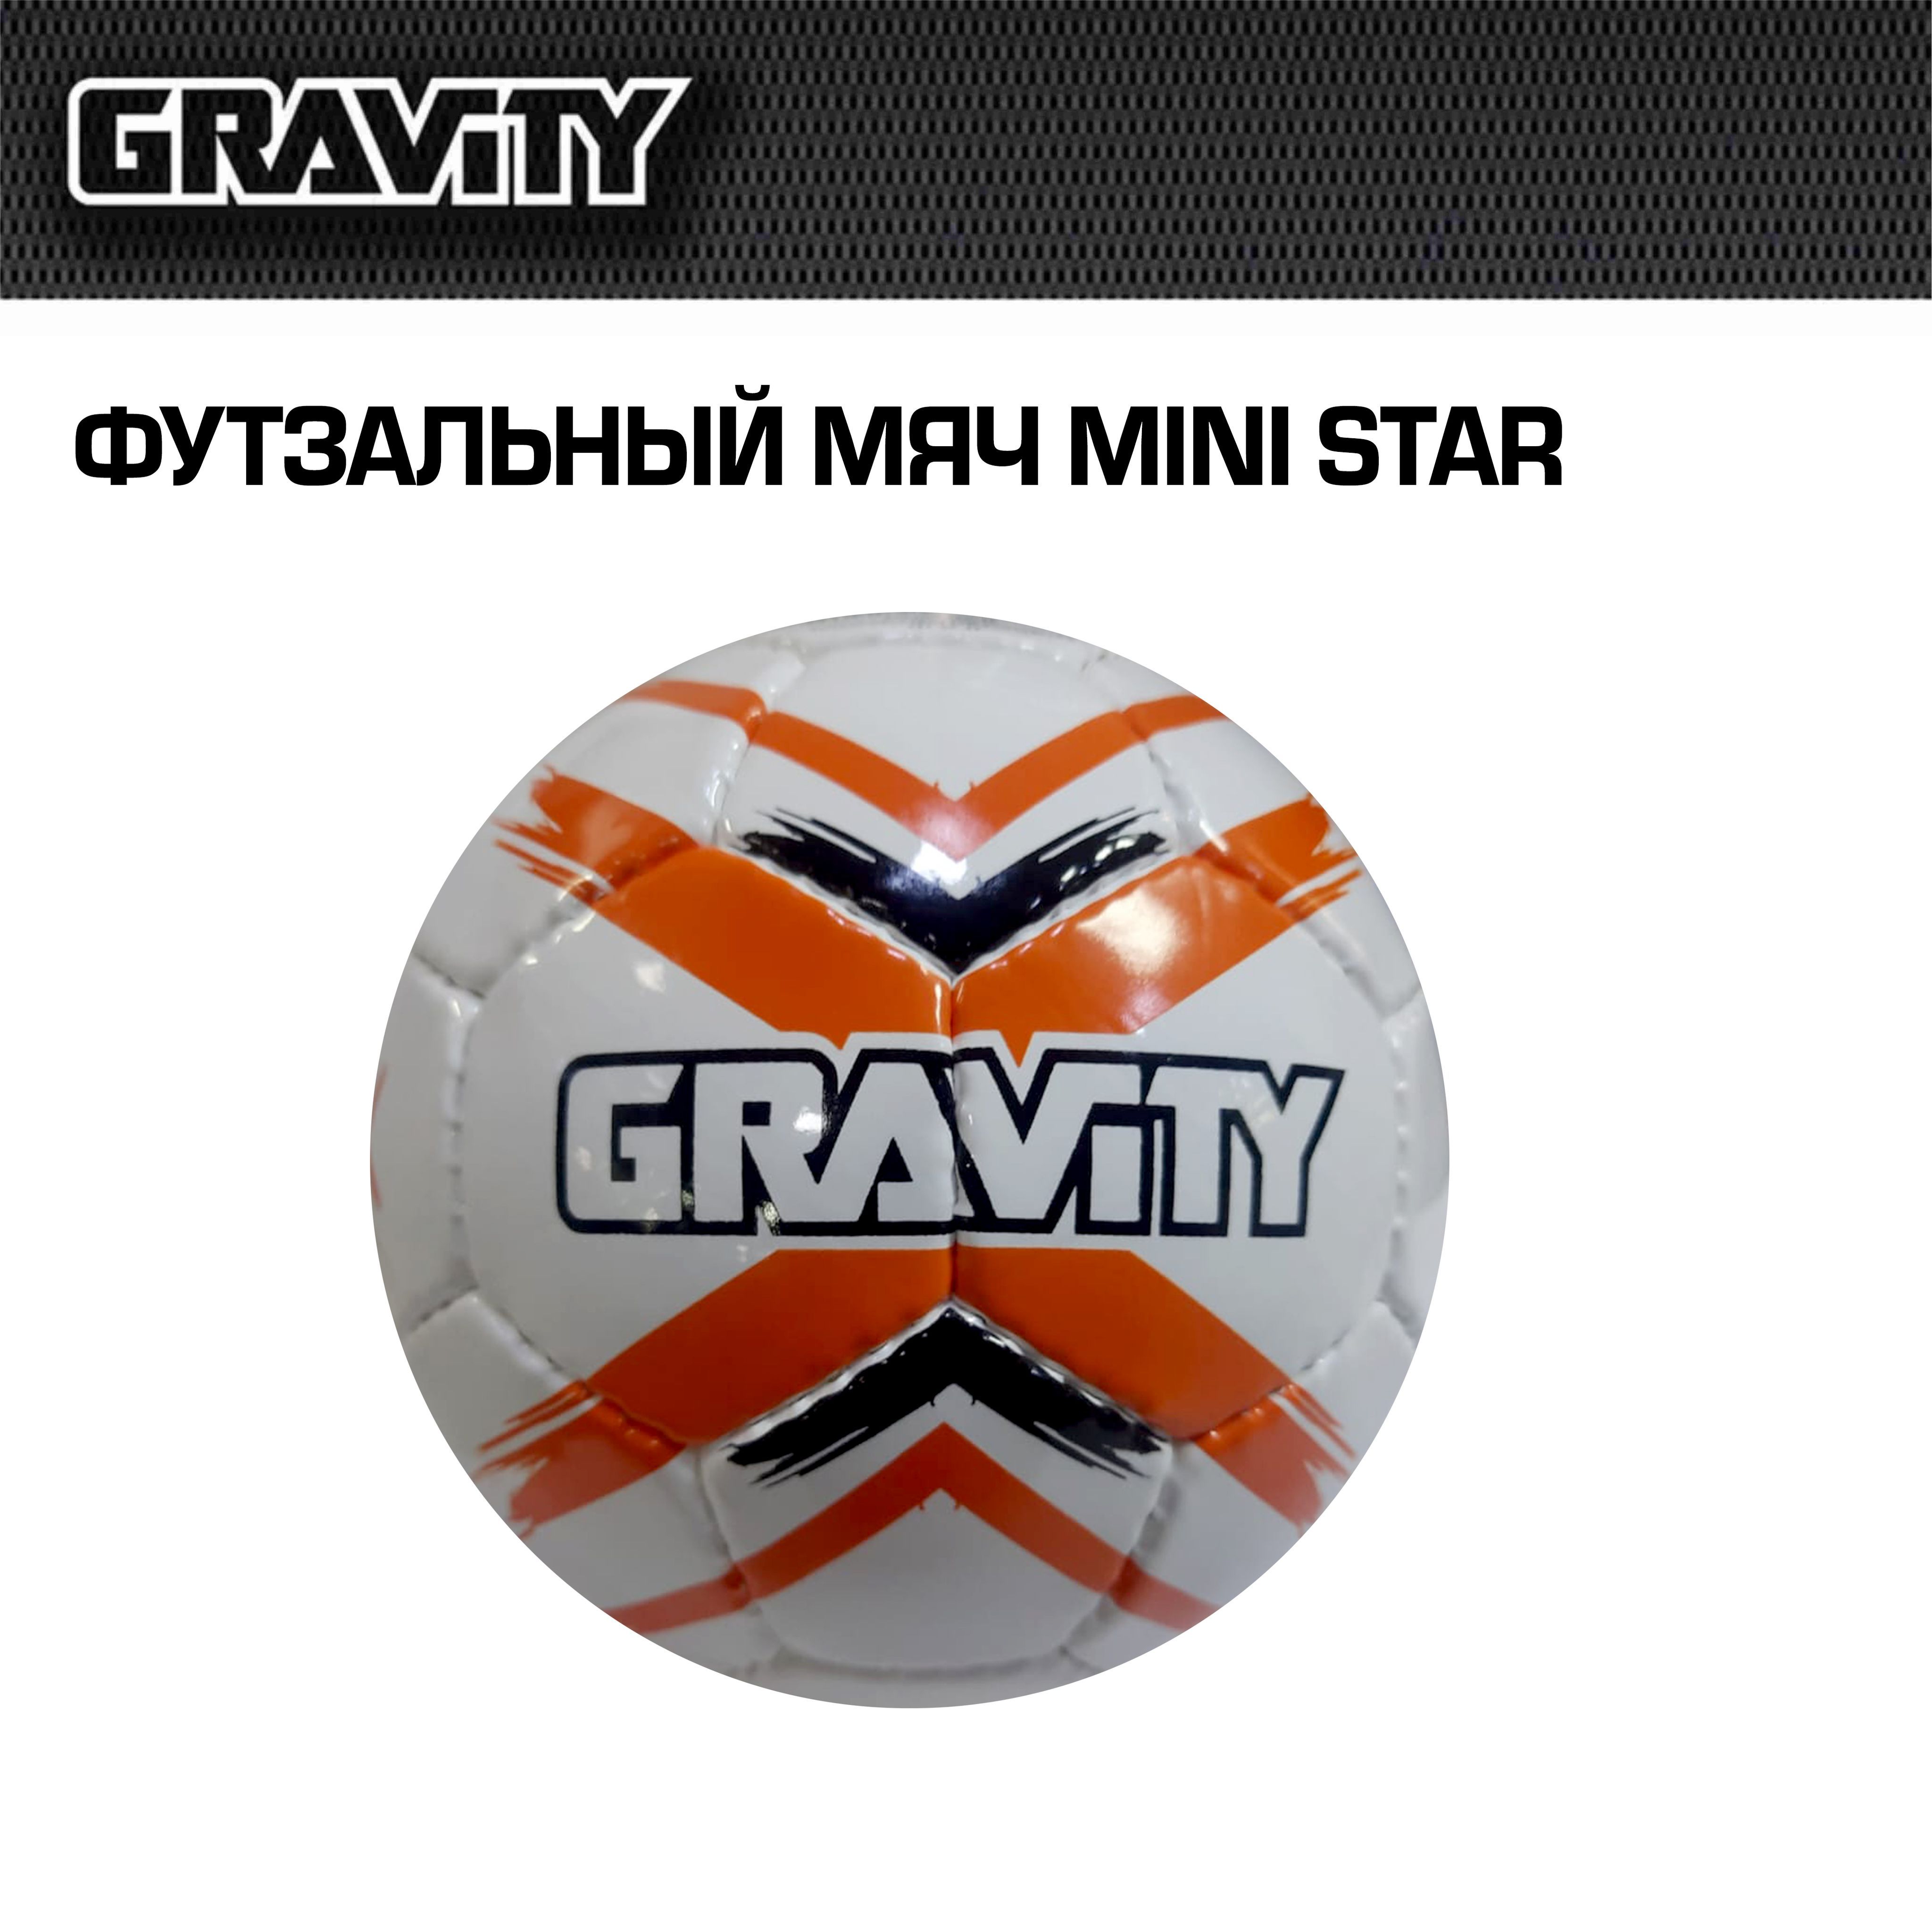 Сувенирный мяч MINI STAR Gravity, ручная сшивка, диаметр 13 см